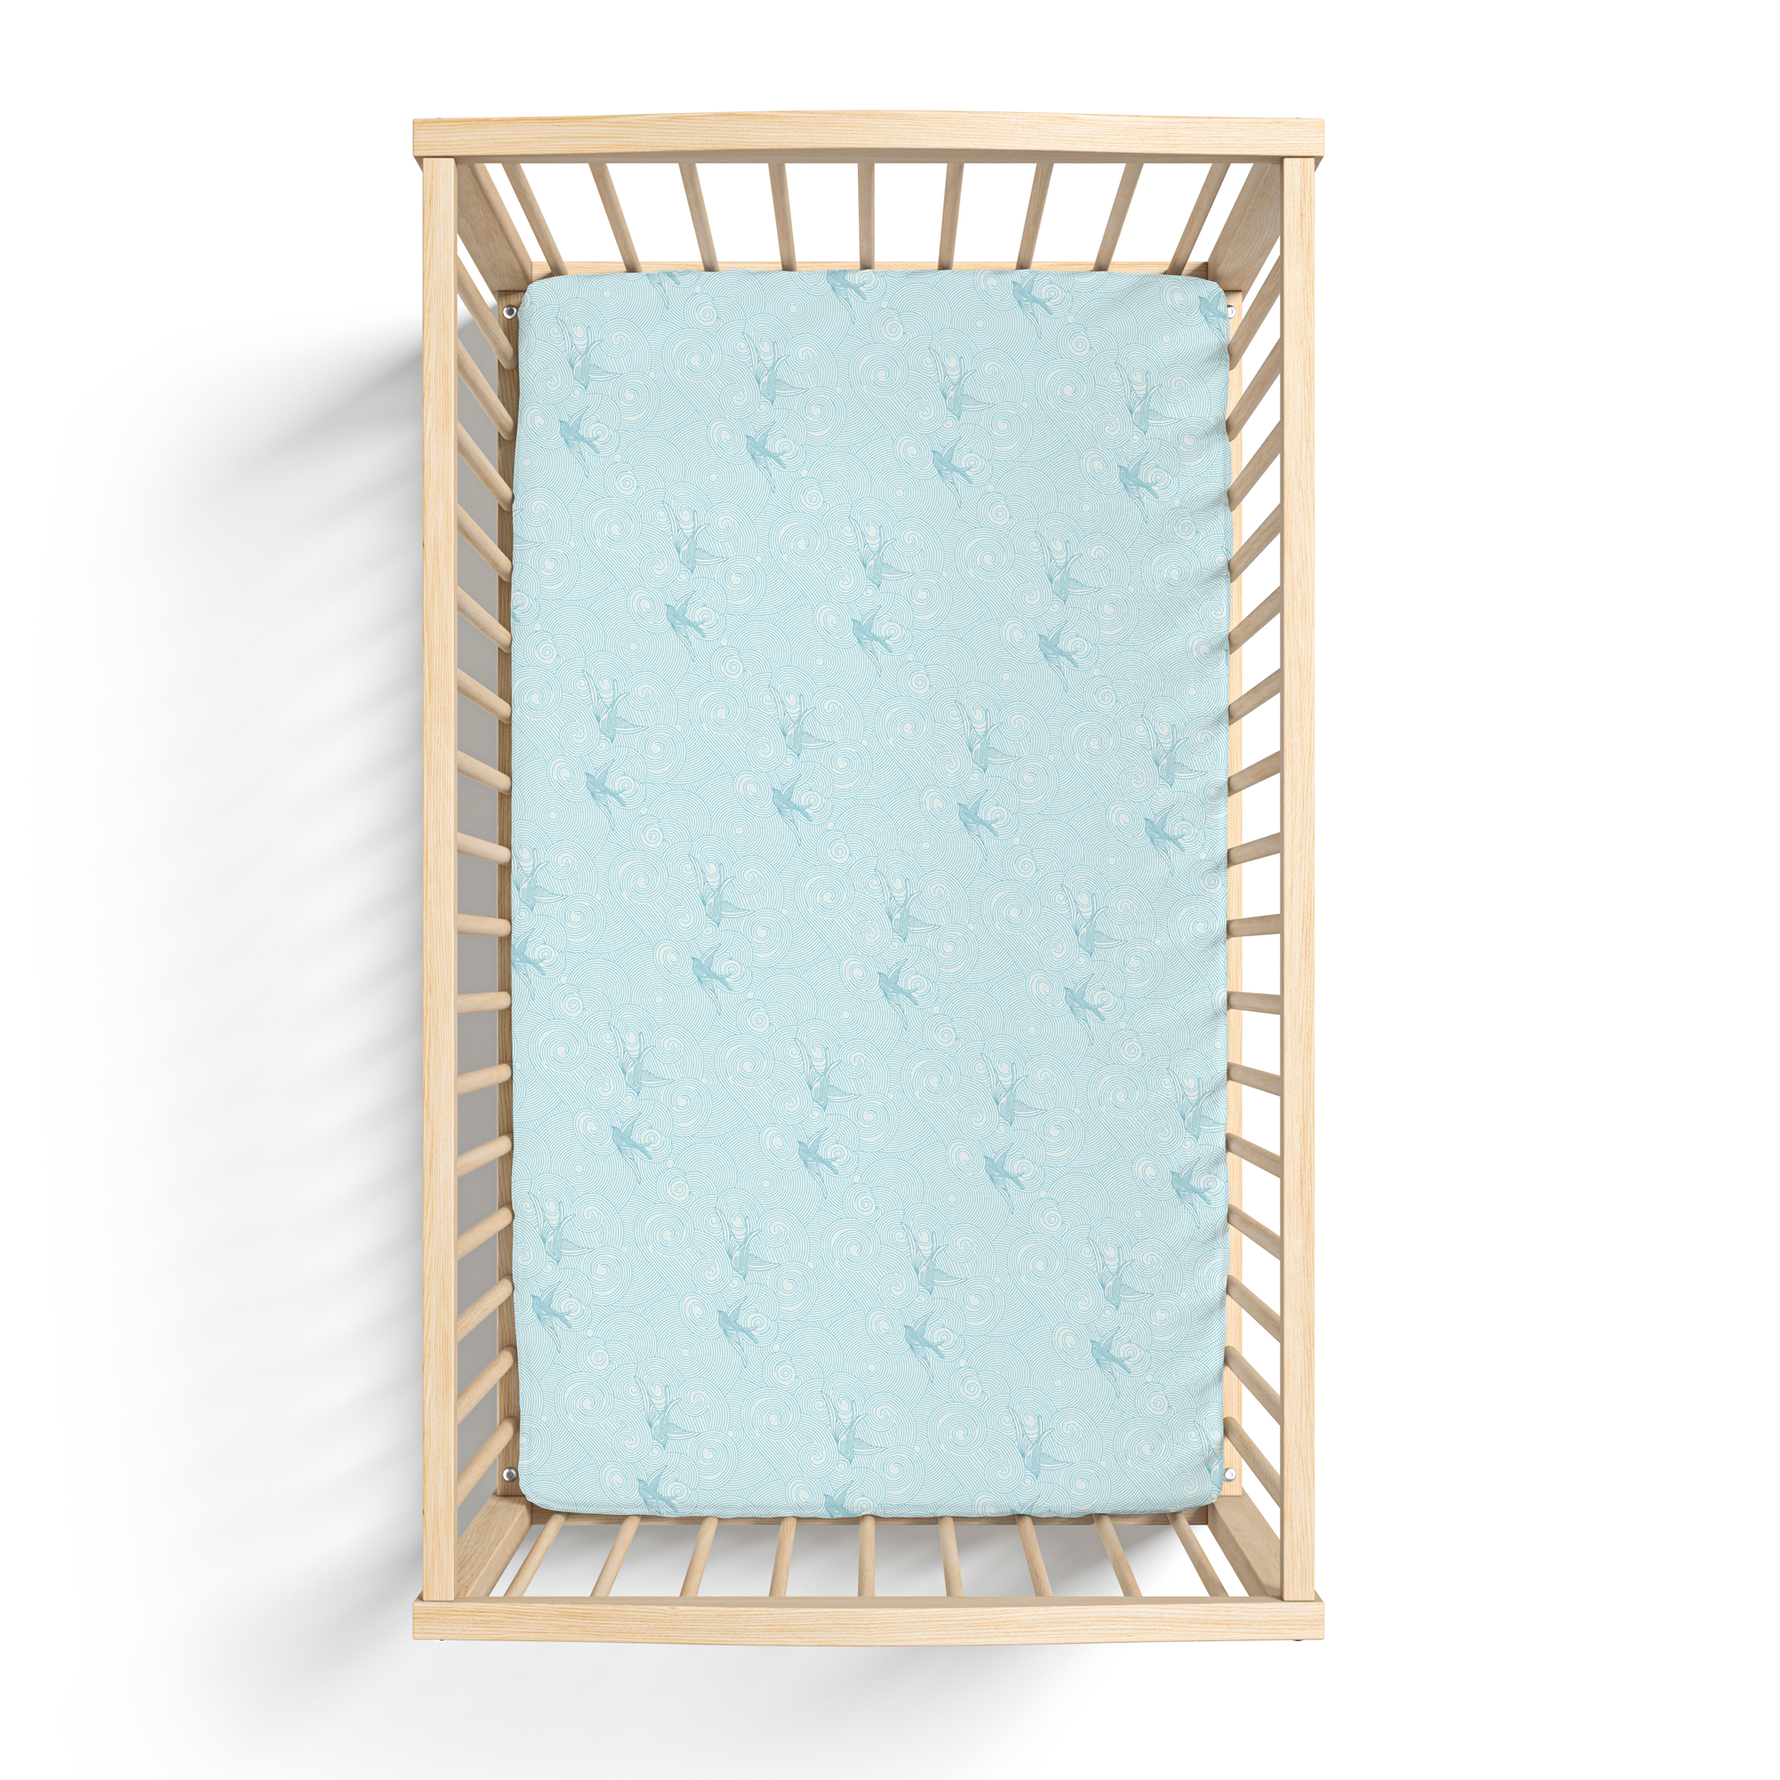 Tranquil Skies Crib Sheet - Lindsay Ann Artistry